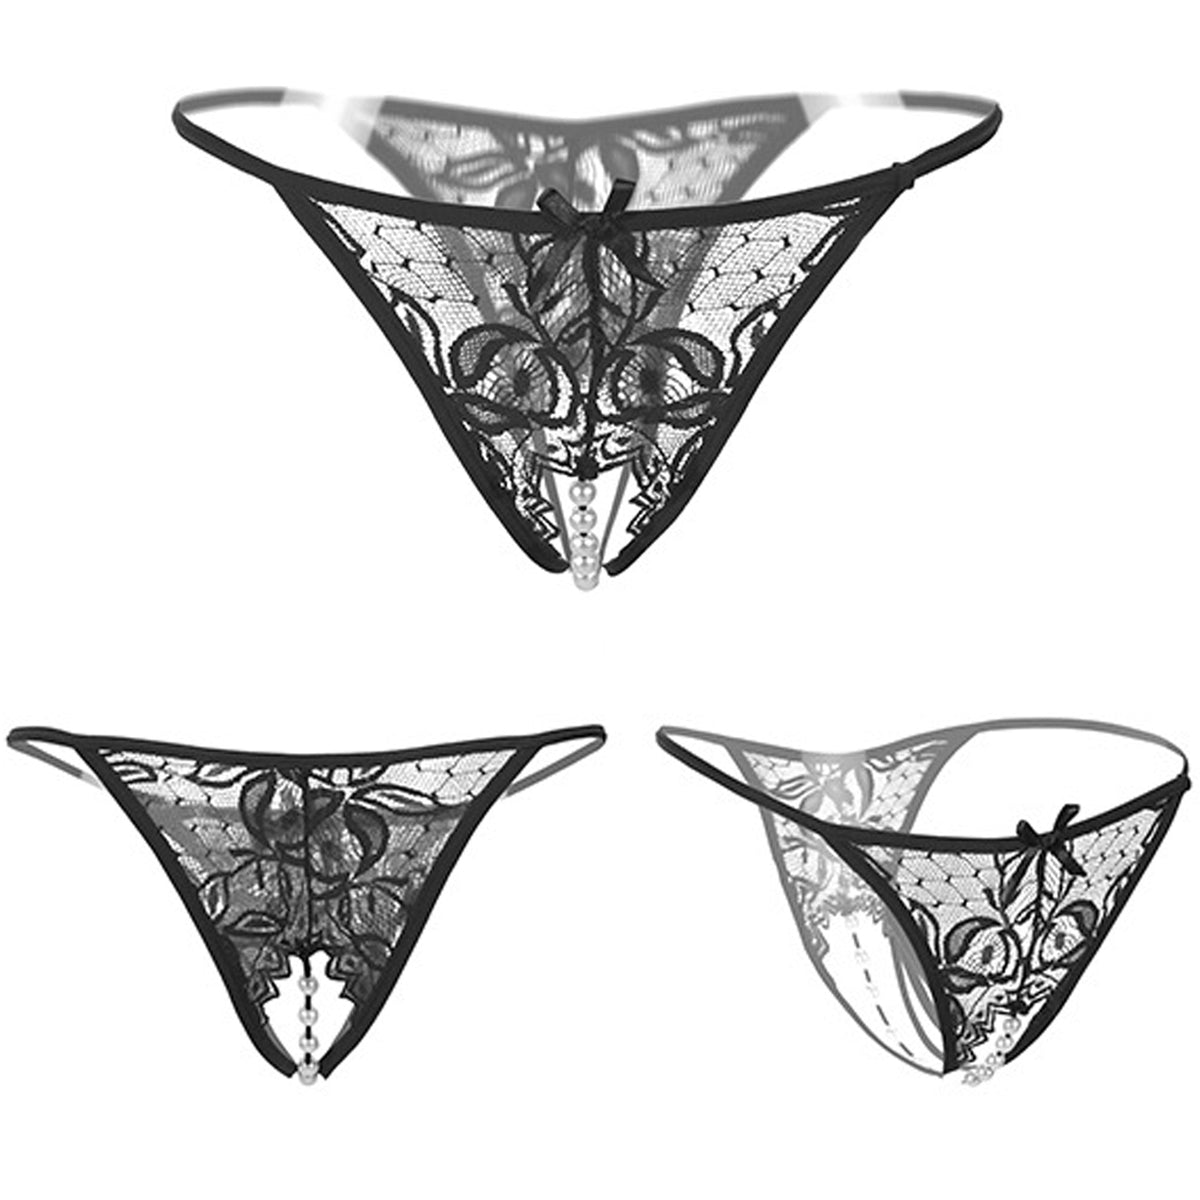  Yomorio Black Lace Thong Underwear - Sheer Mesh, and Unique